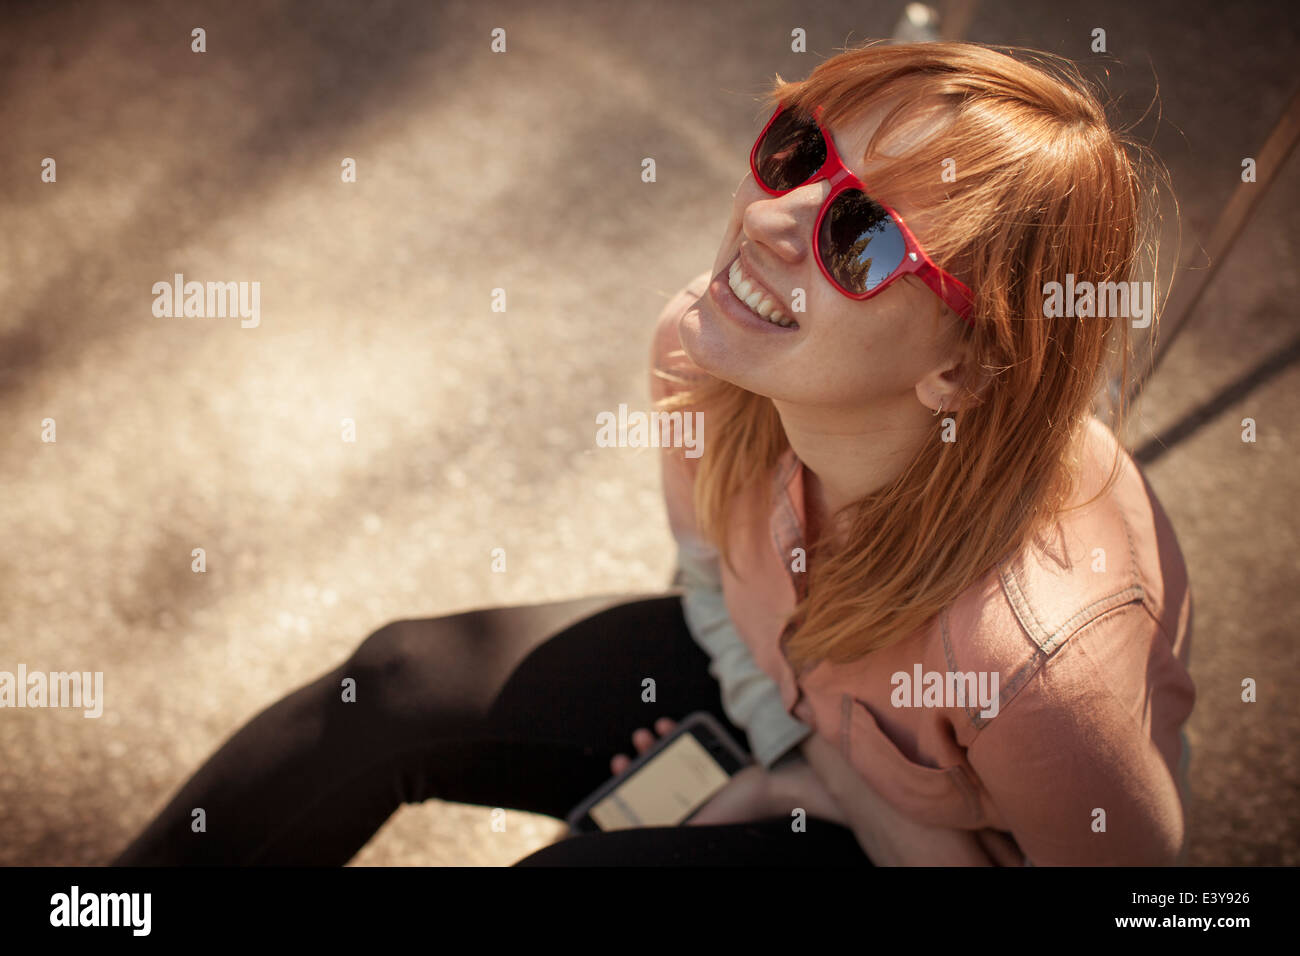 Candid portrait of mid adult woman in sunglasses gazing upward Stock Photo